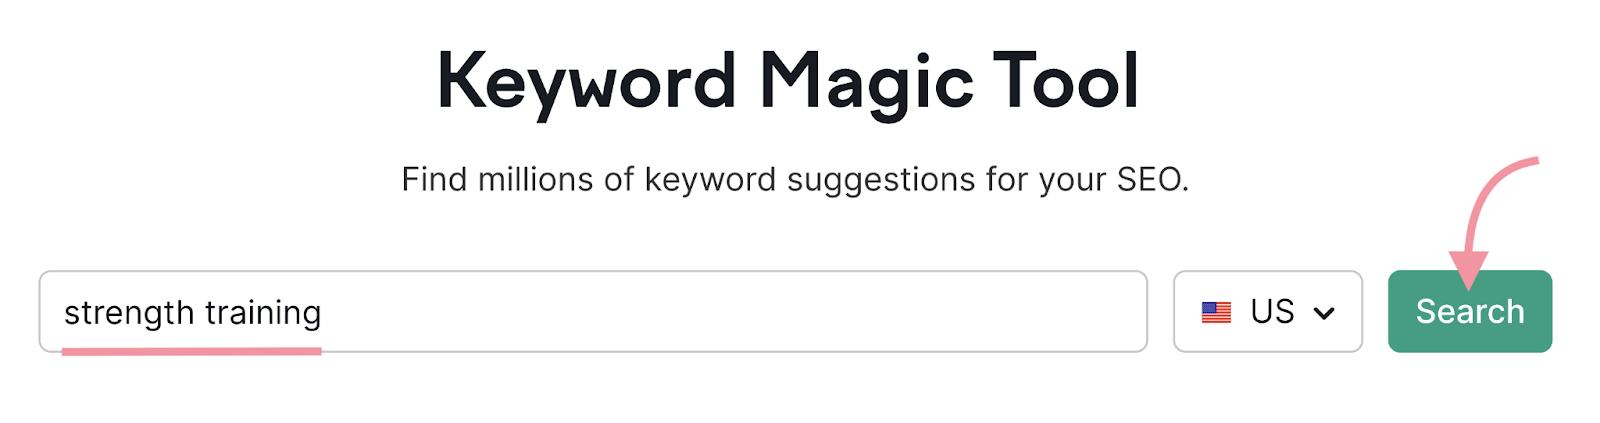 Keyword Magic Tool strength training search